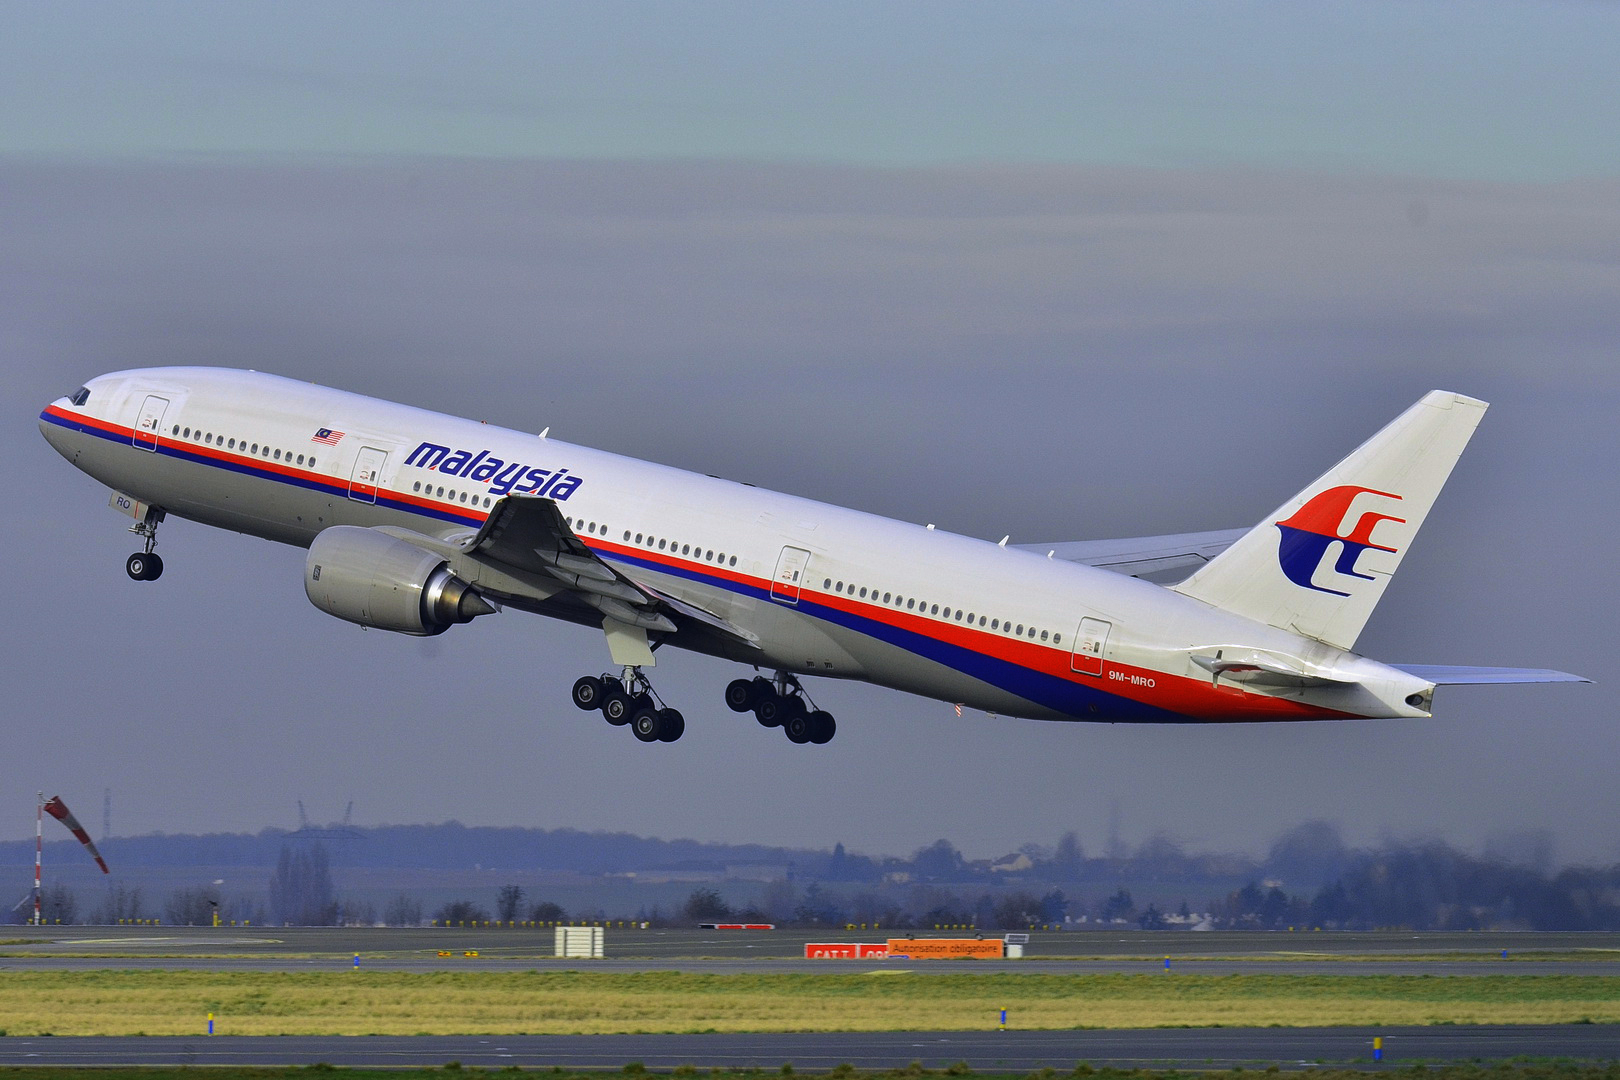 Dutch media lose case against govt over MH17 flight info